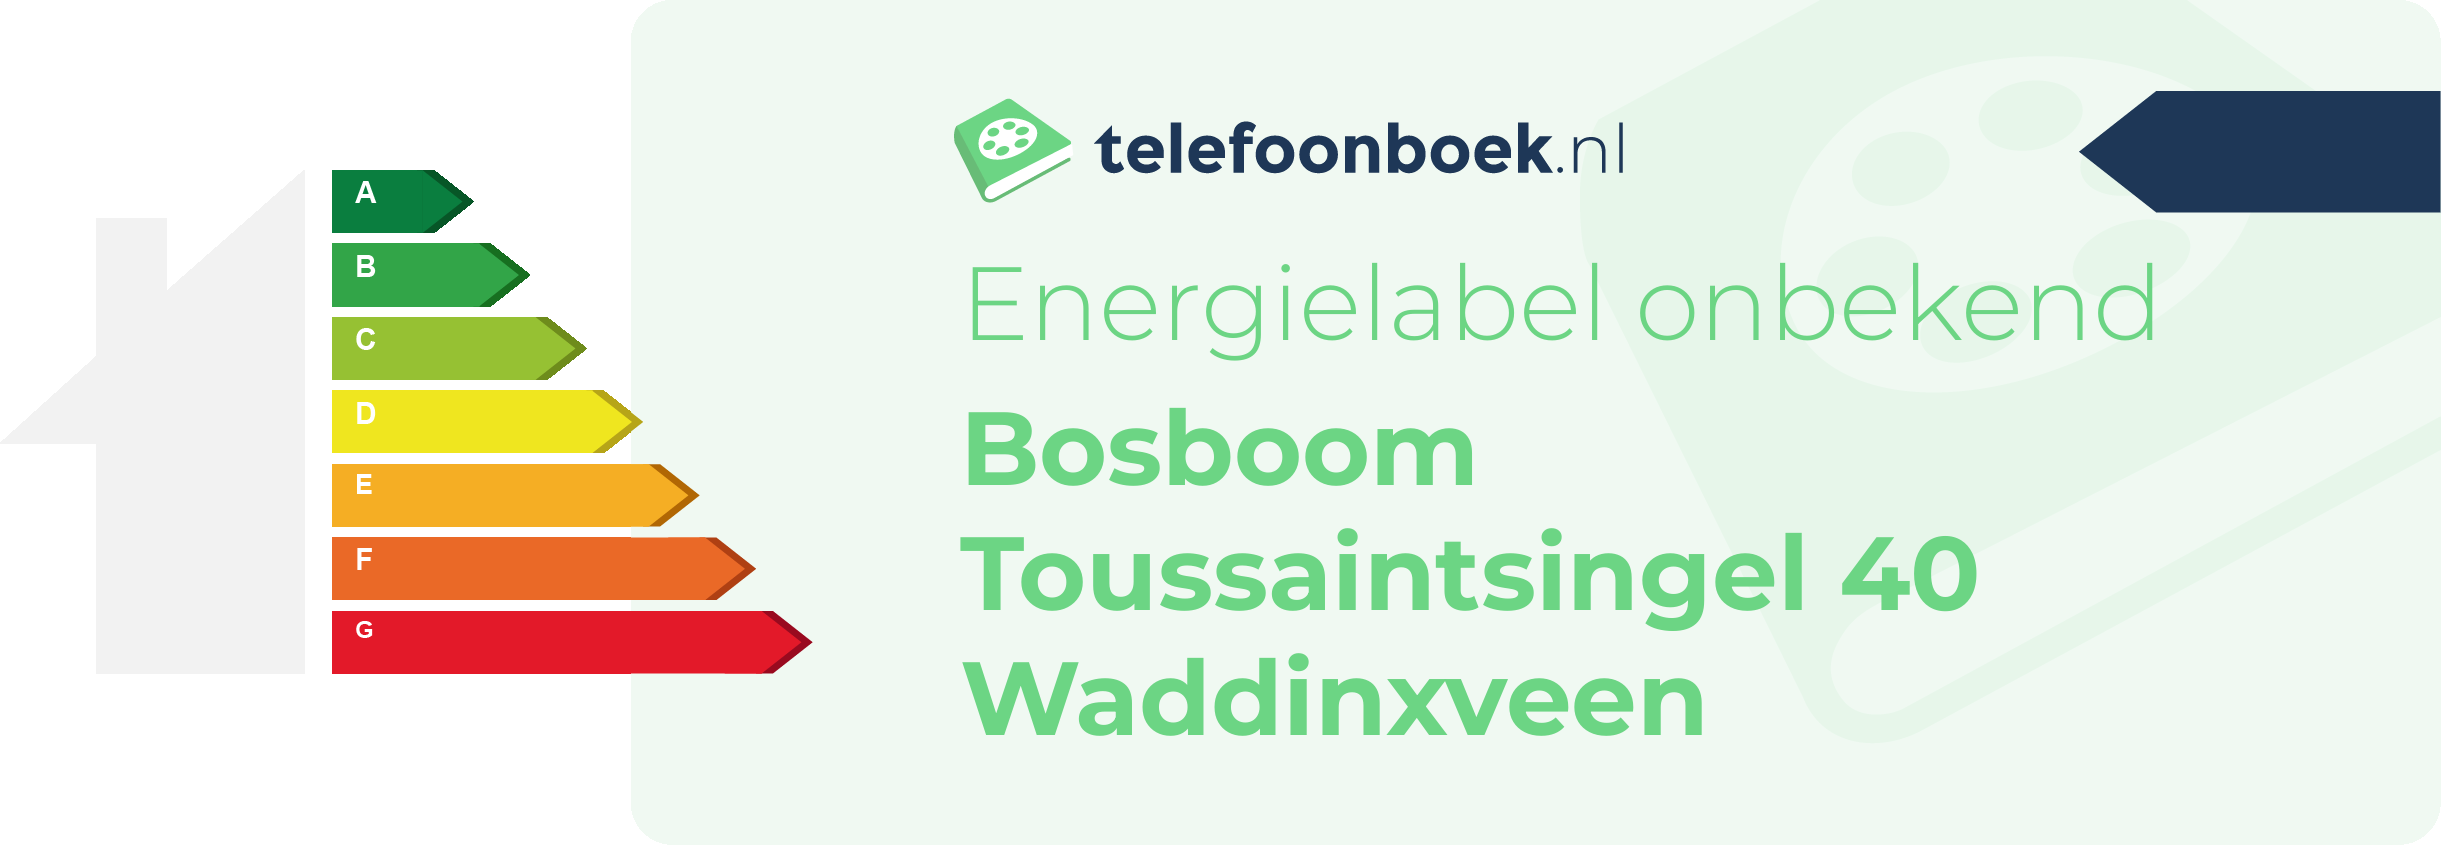 Energielabel Bosboom Toussaintsingel 40 Waddinxveen